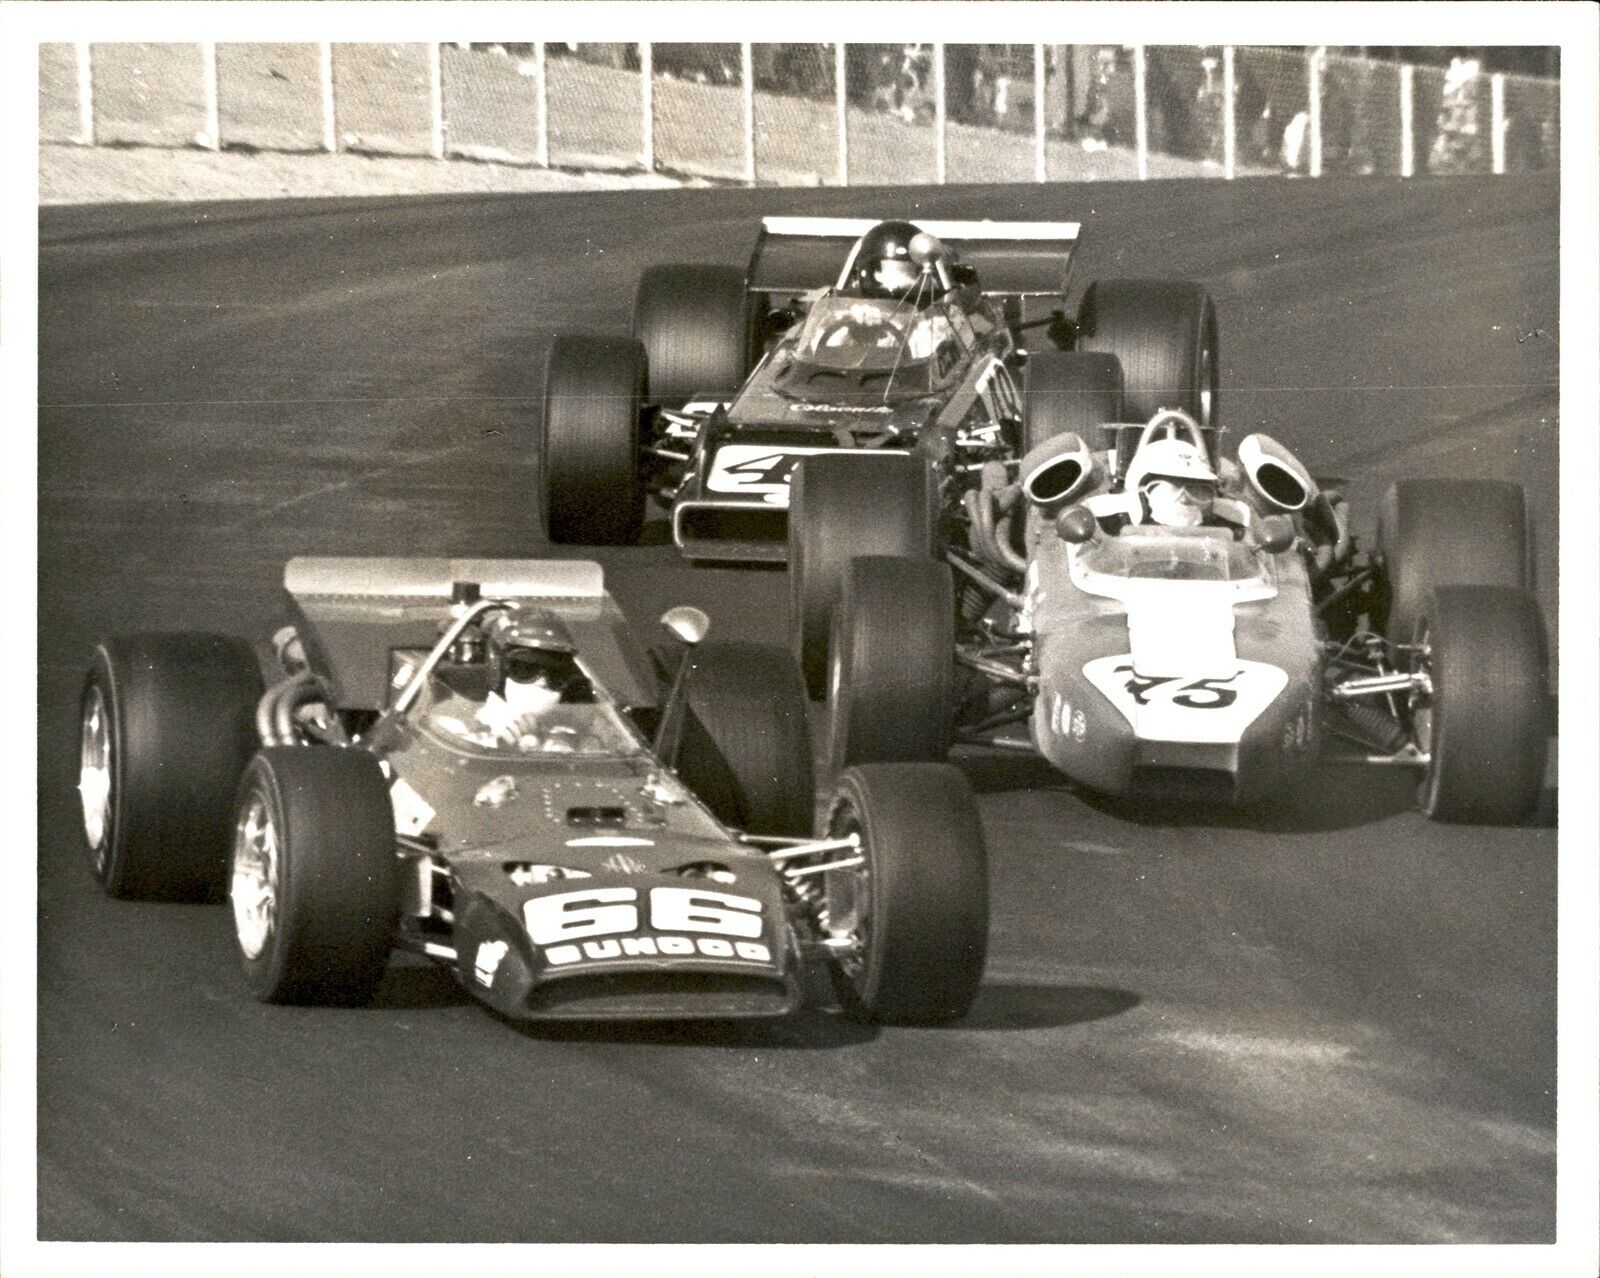 JT10 '69 Original Rick Strome Photo INDY TYPE RACE TRACK ACTION SUNOCO #66 CAR